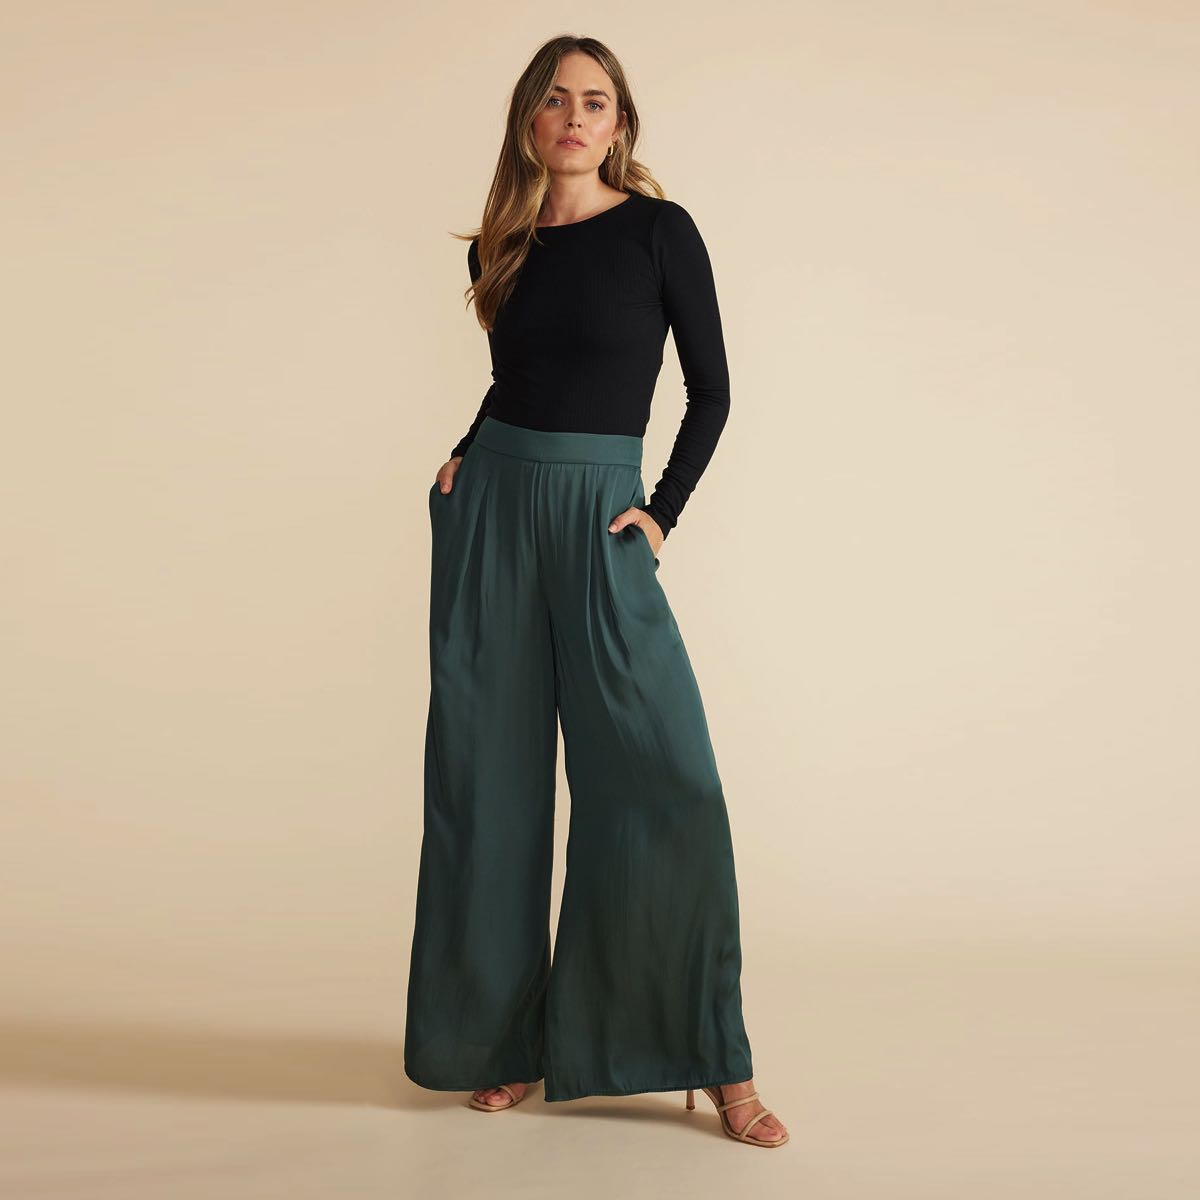 BG Online Shop - Pants terciopelo 😍🔝 🏷 $380 🌟 Nice 